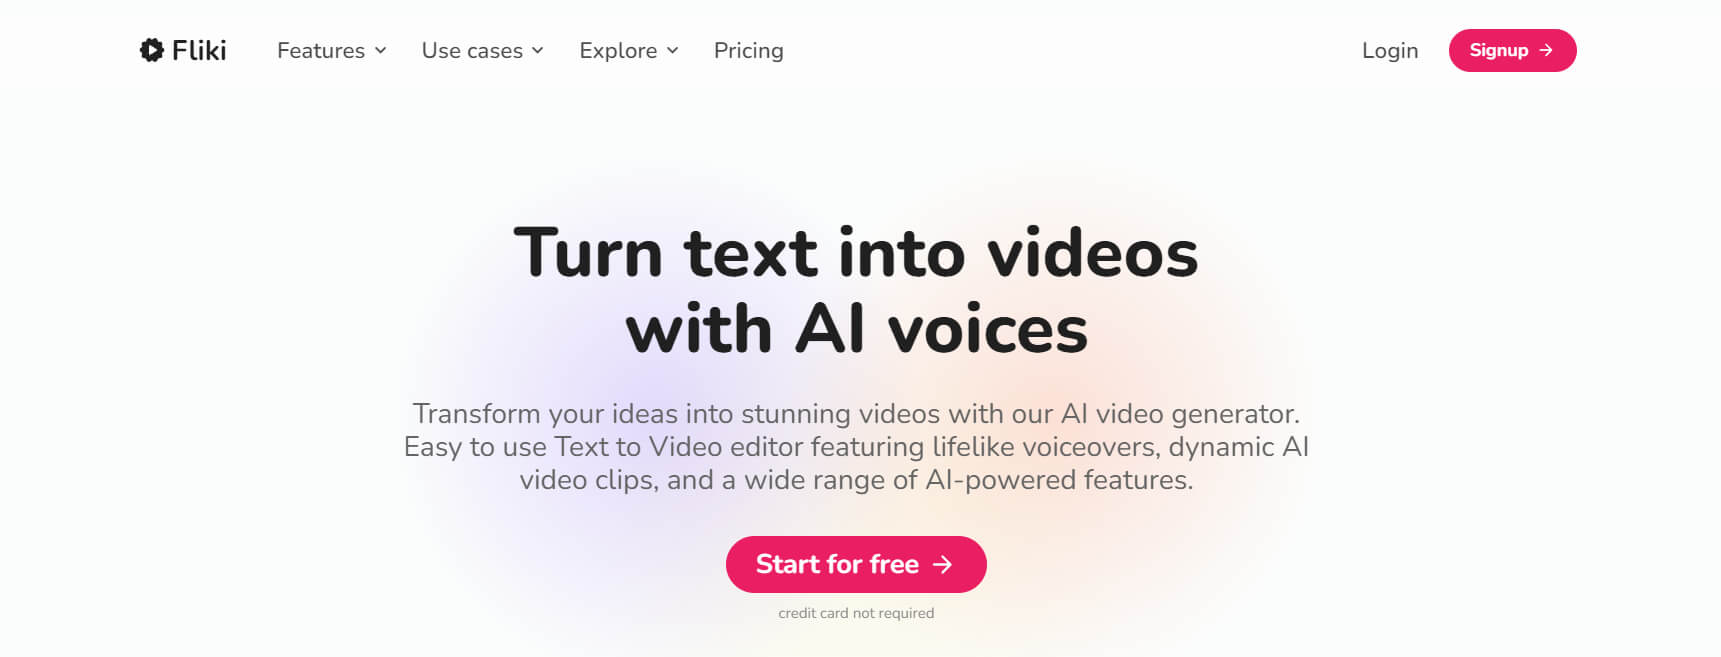  Gerador de vídeo alimentado por IA transforma texto em vídeos realistas. 